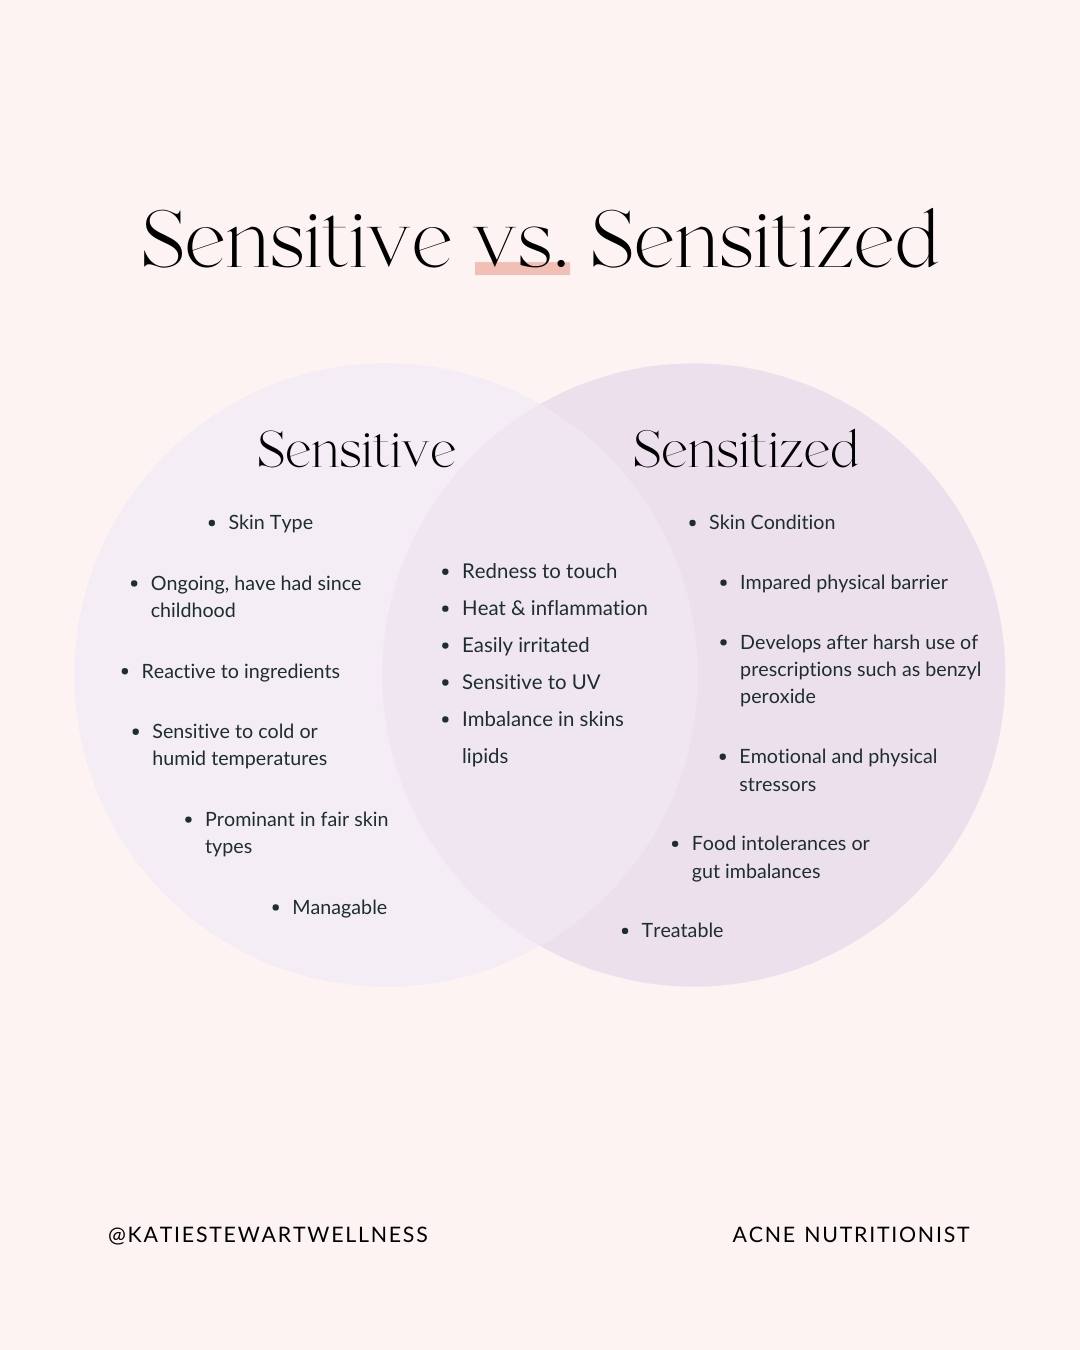 Venn diagram showcasing the similarities and differences between sensitive vs sensitized skin